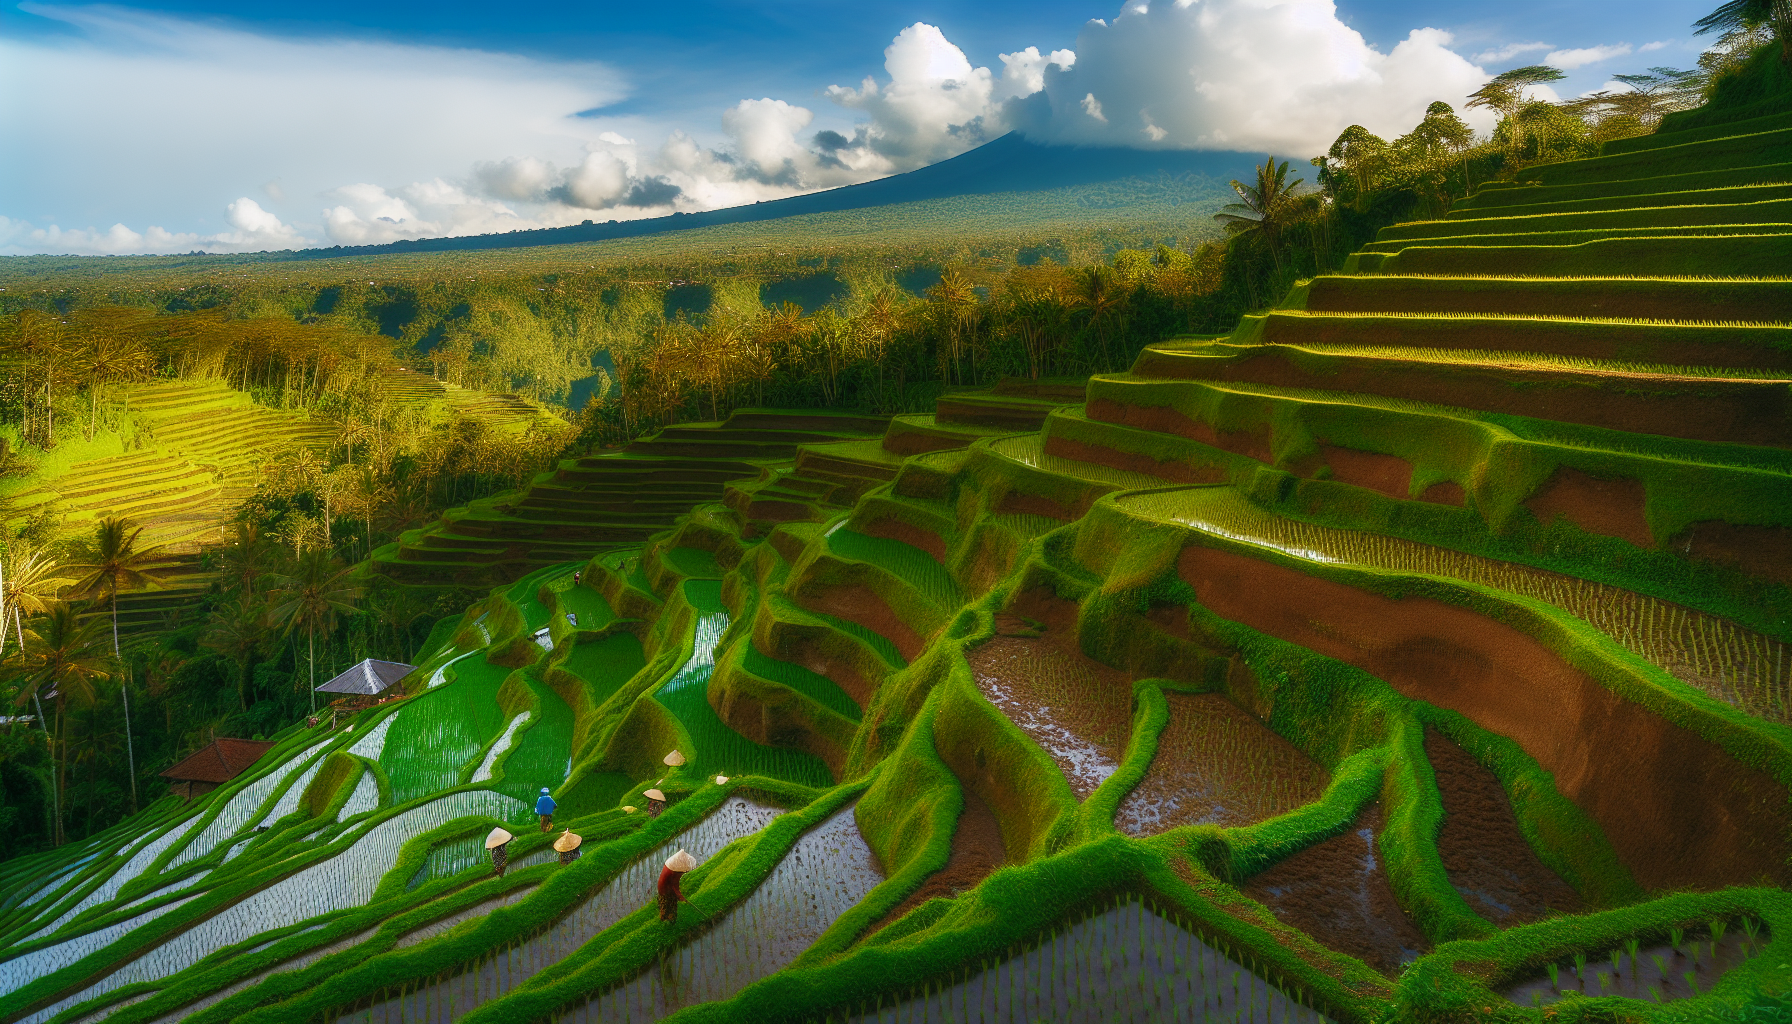 Idyllic rice terraces in Sidemen Valley